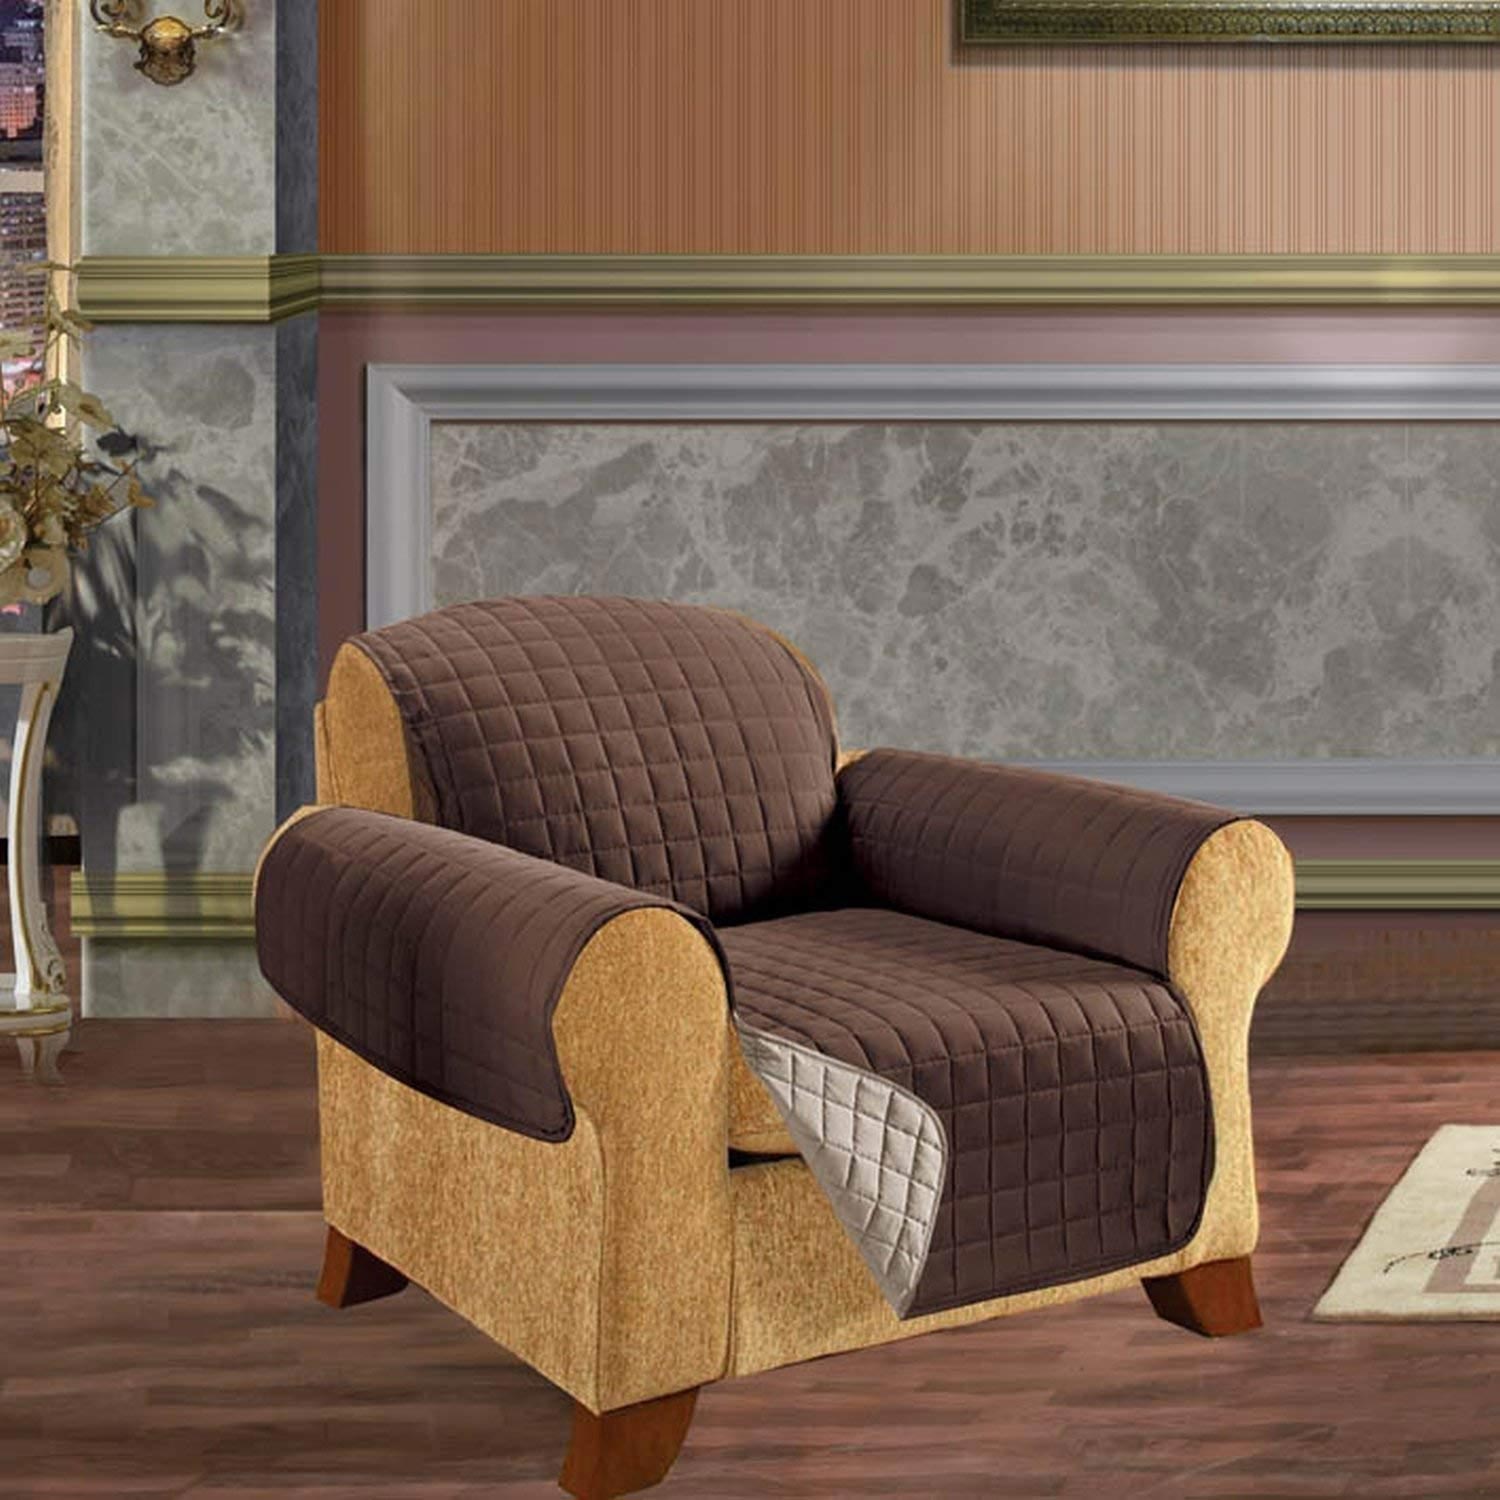 Reversible Elegant Comfort Quilted Furniture Protector